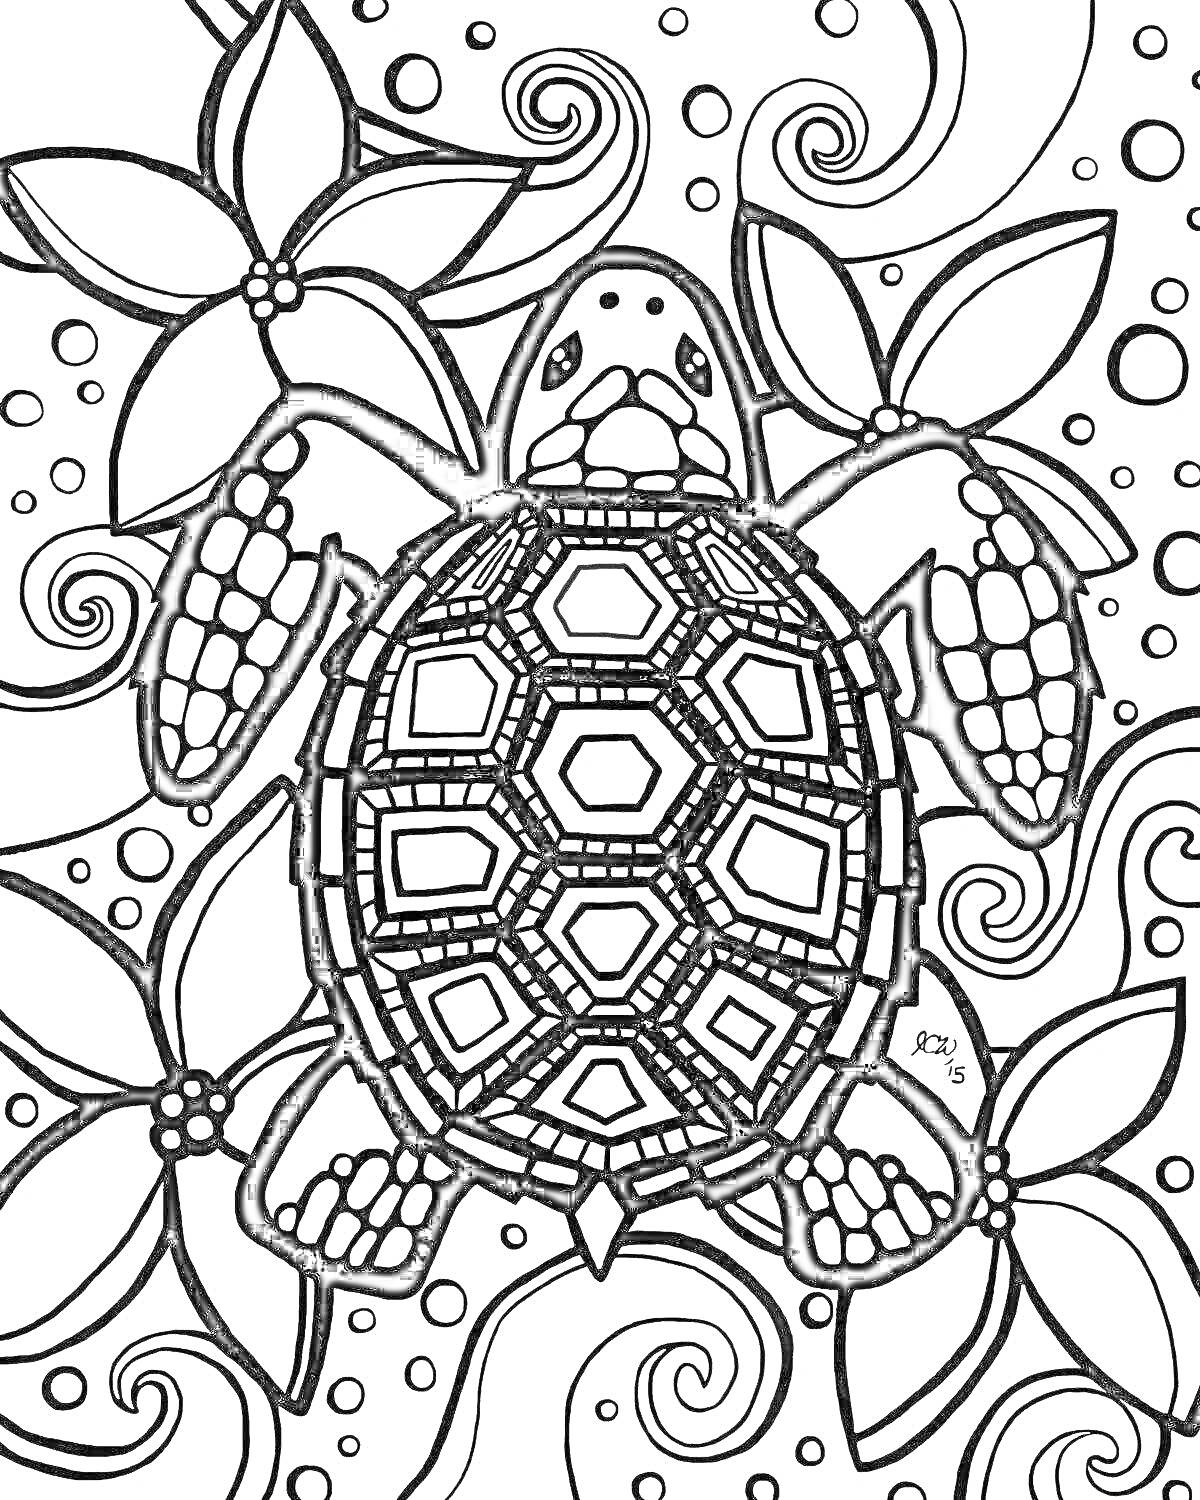 Раскраска Черепаха с узорчатым панцирем среди цветов и кругов